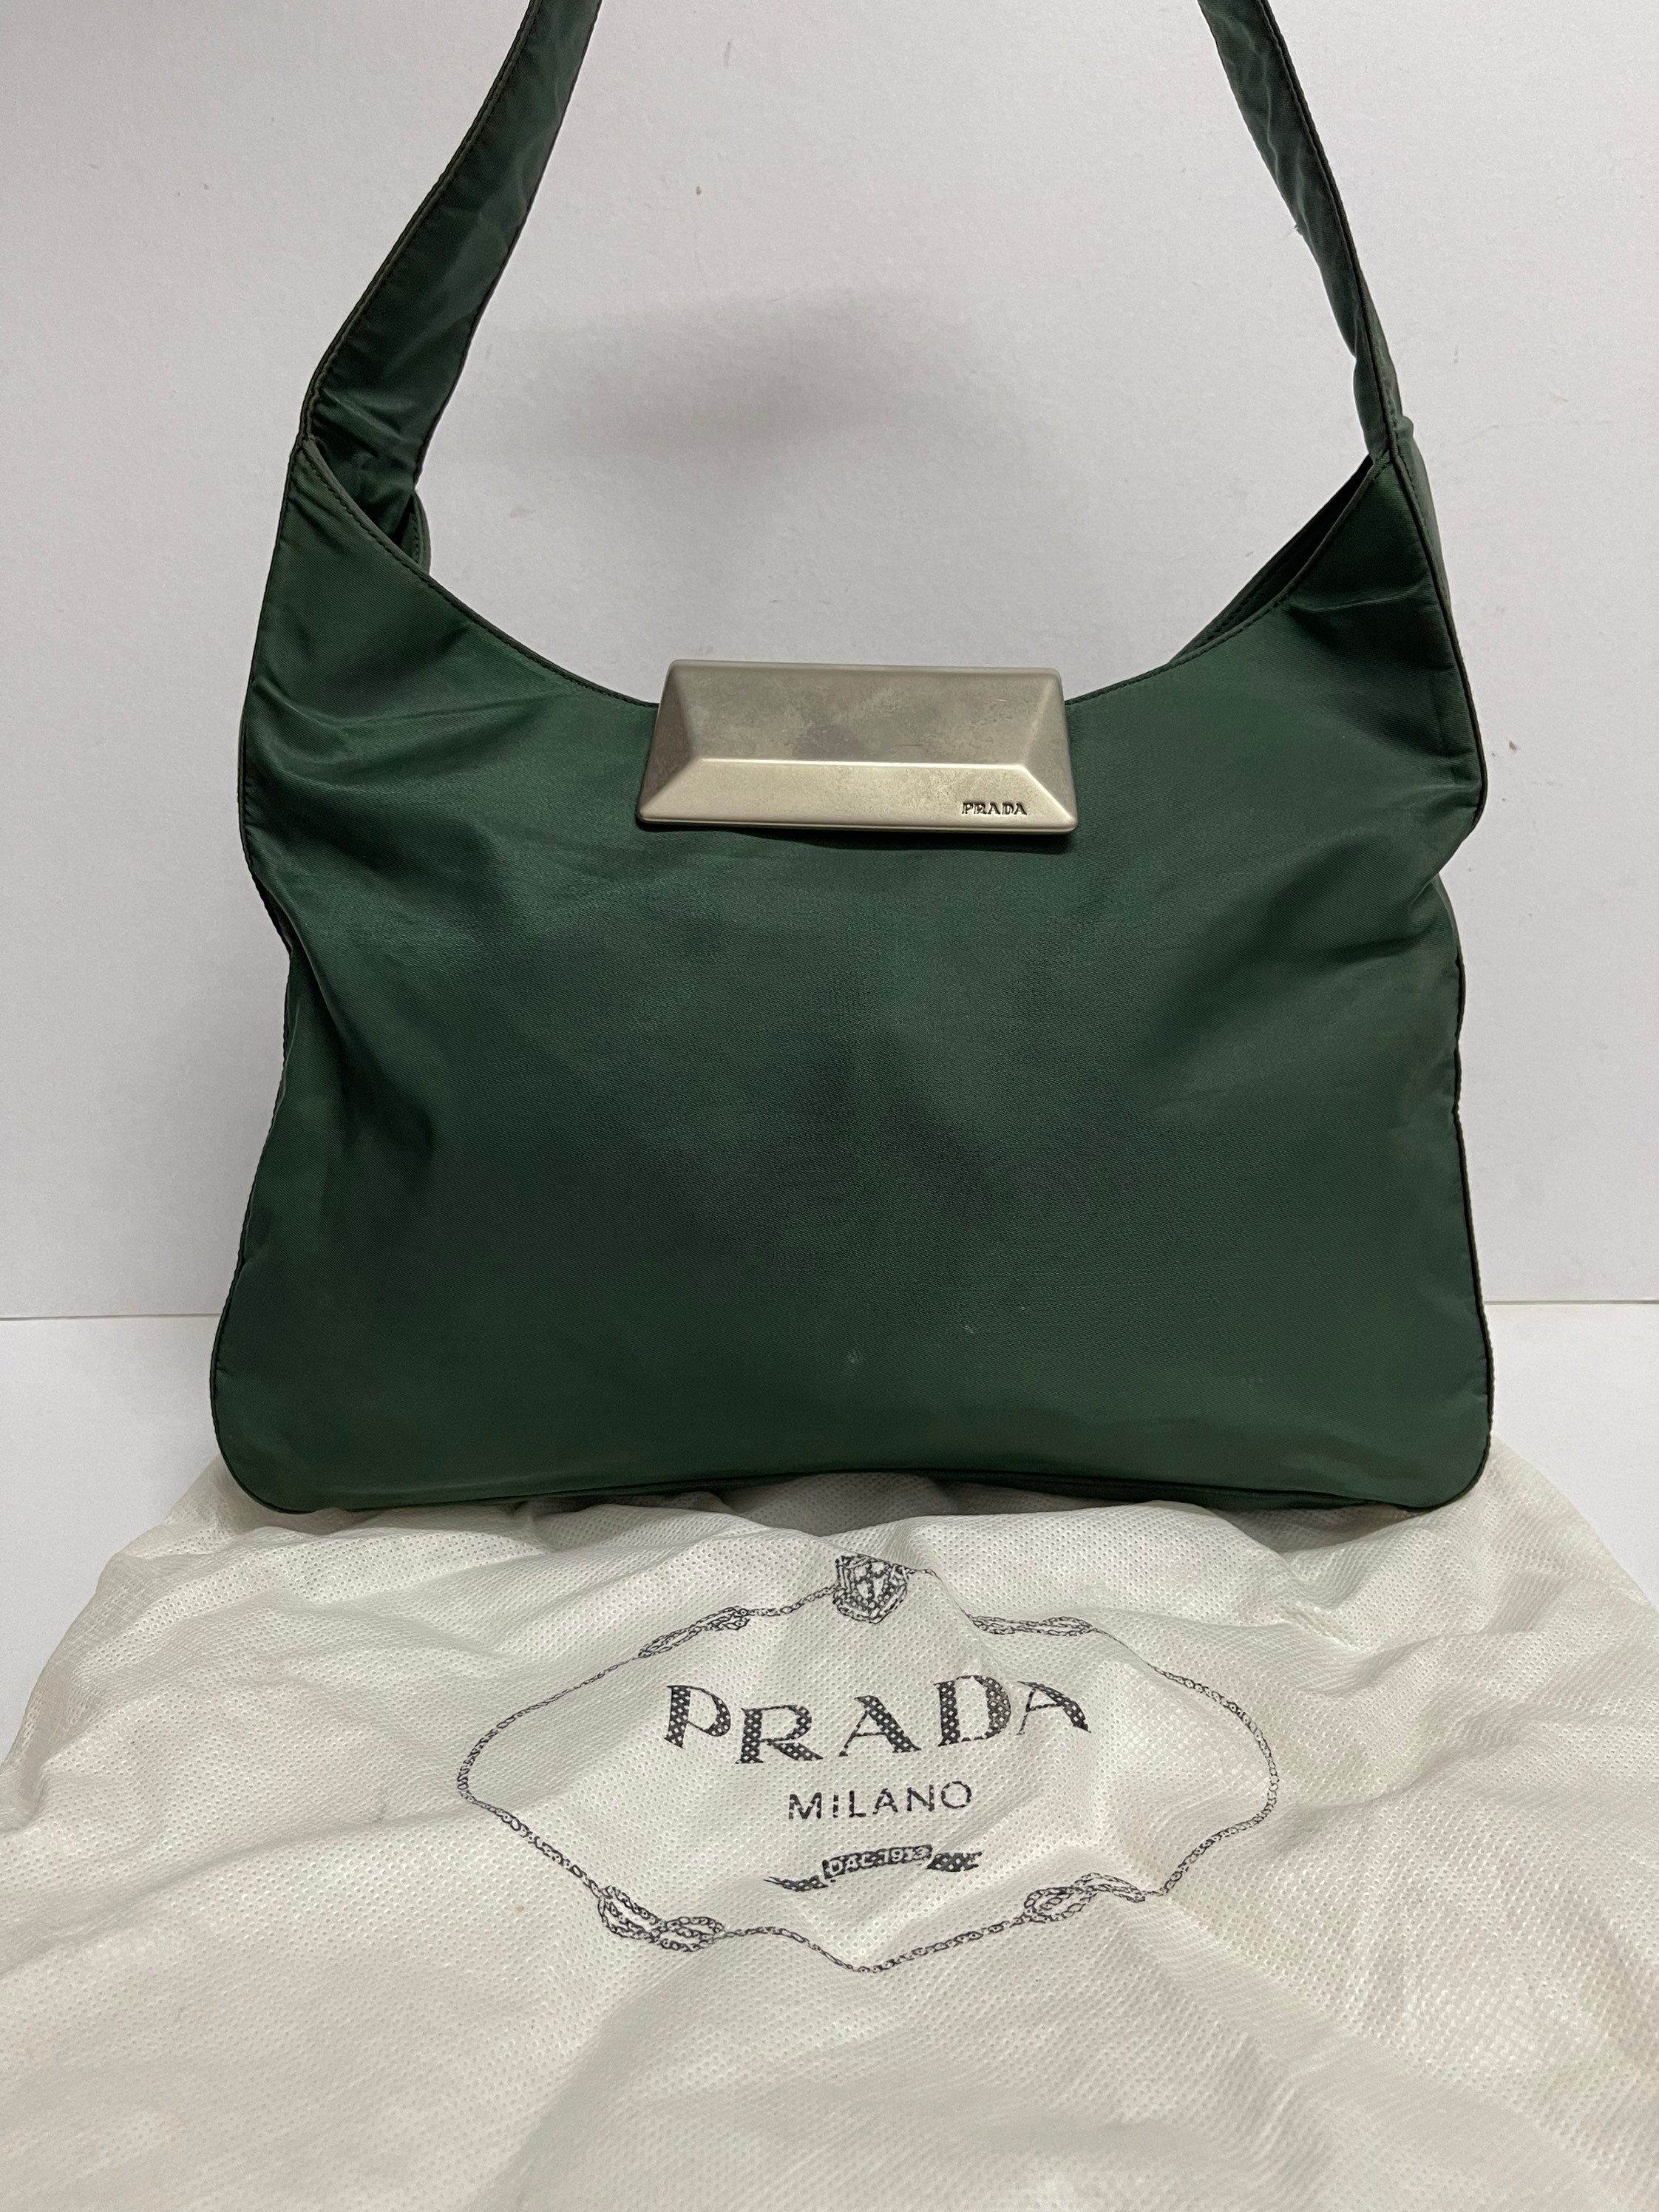 How To Authenticate The Nylon Prada Bag